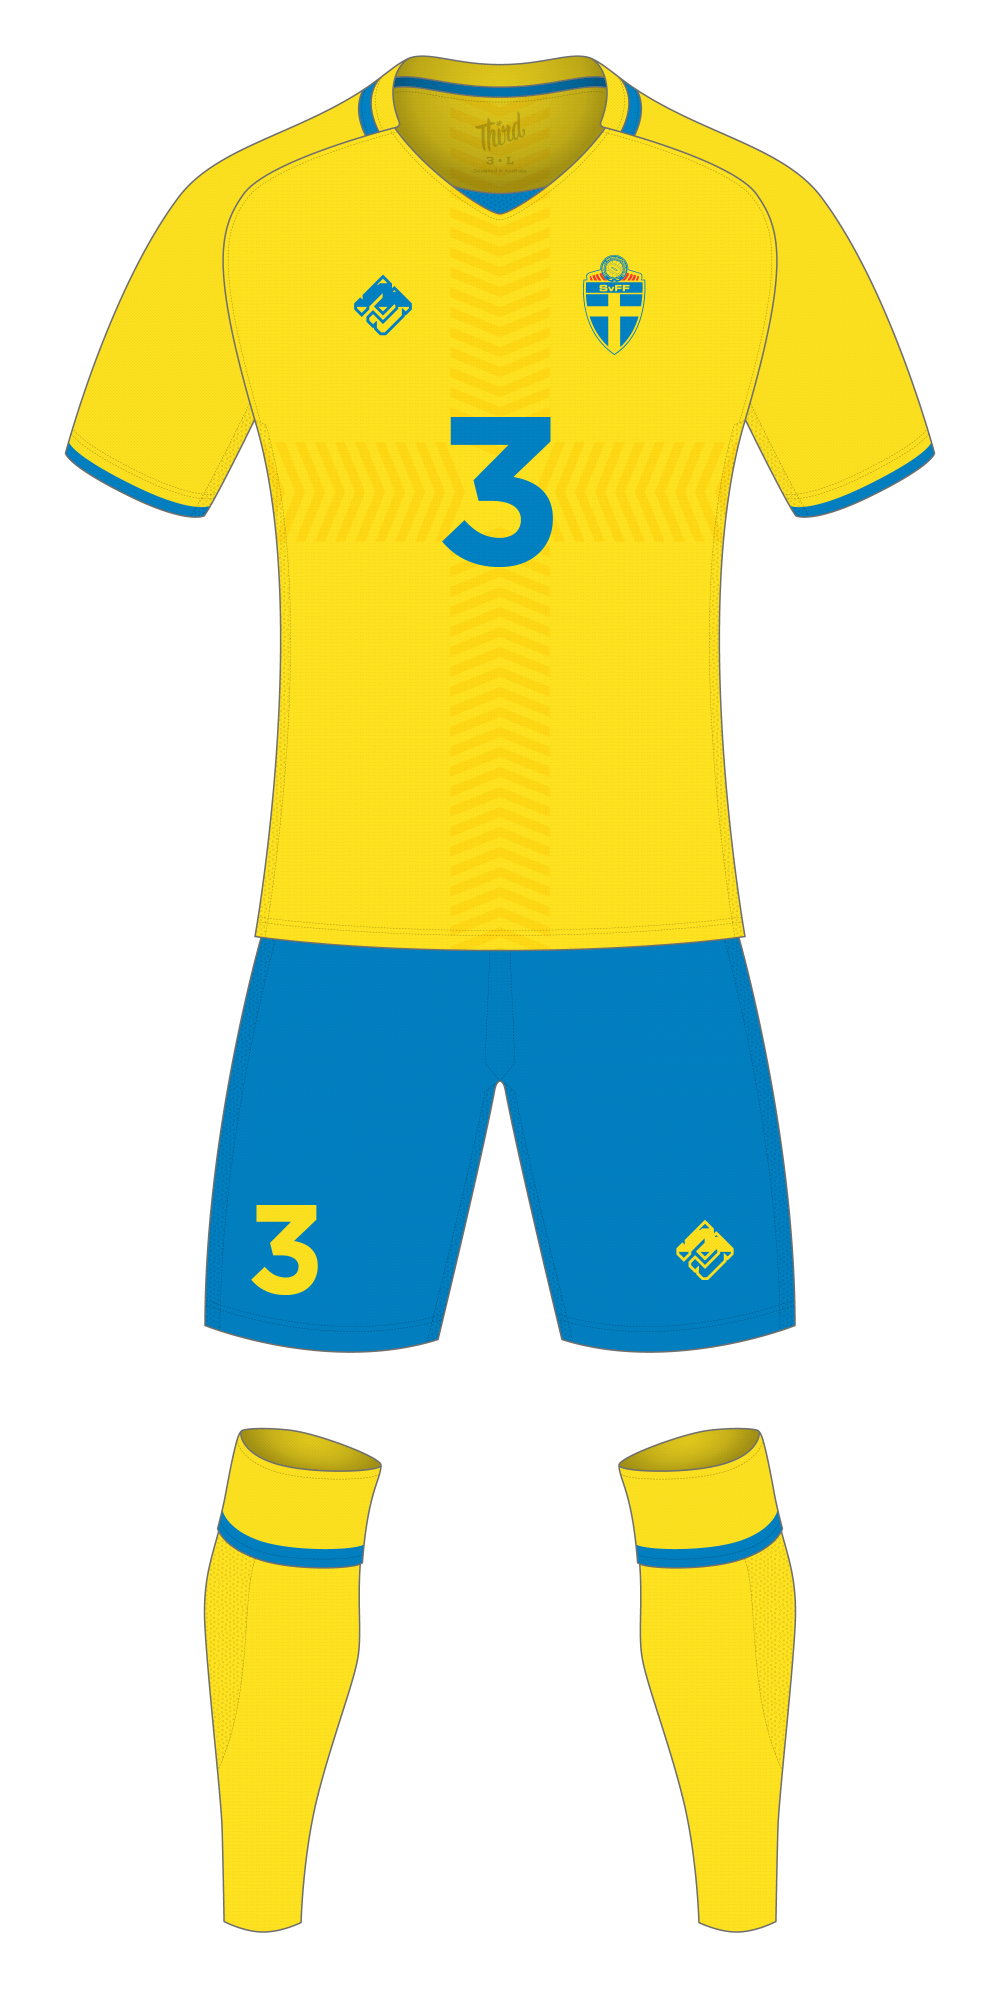 Sweden World Cup 2018 concept